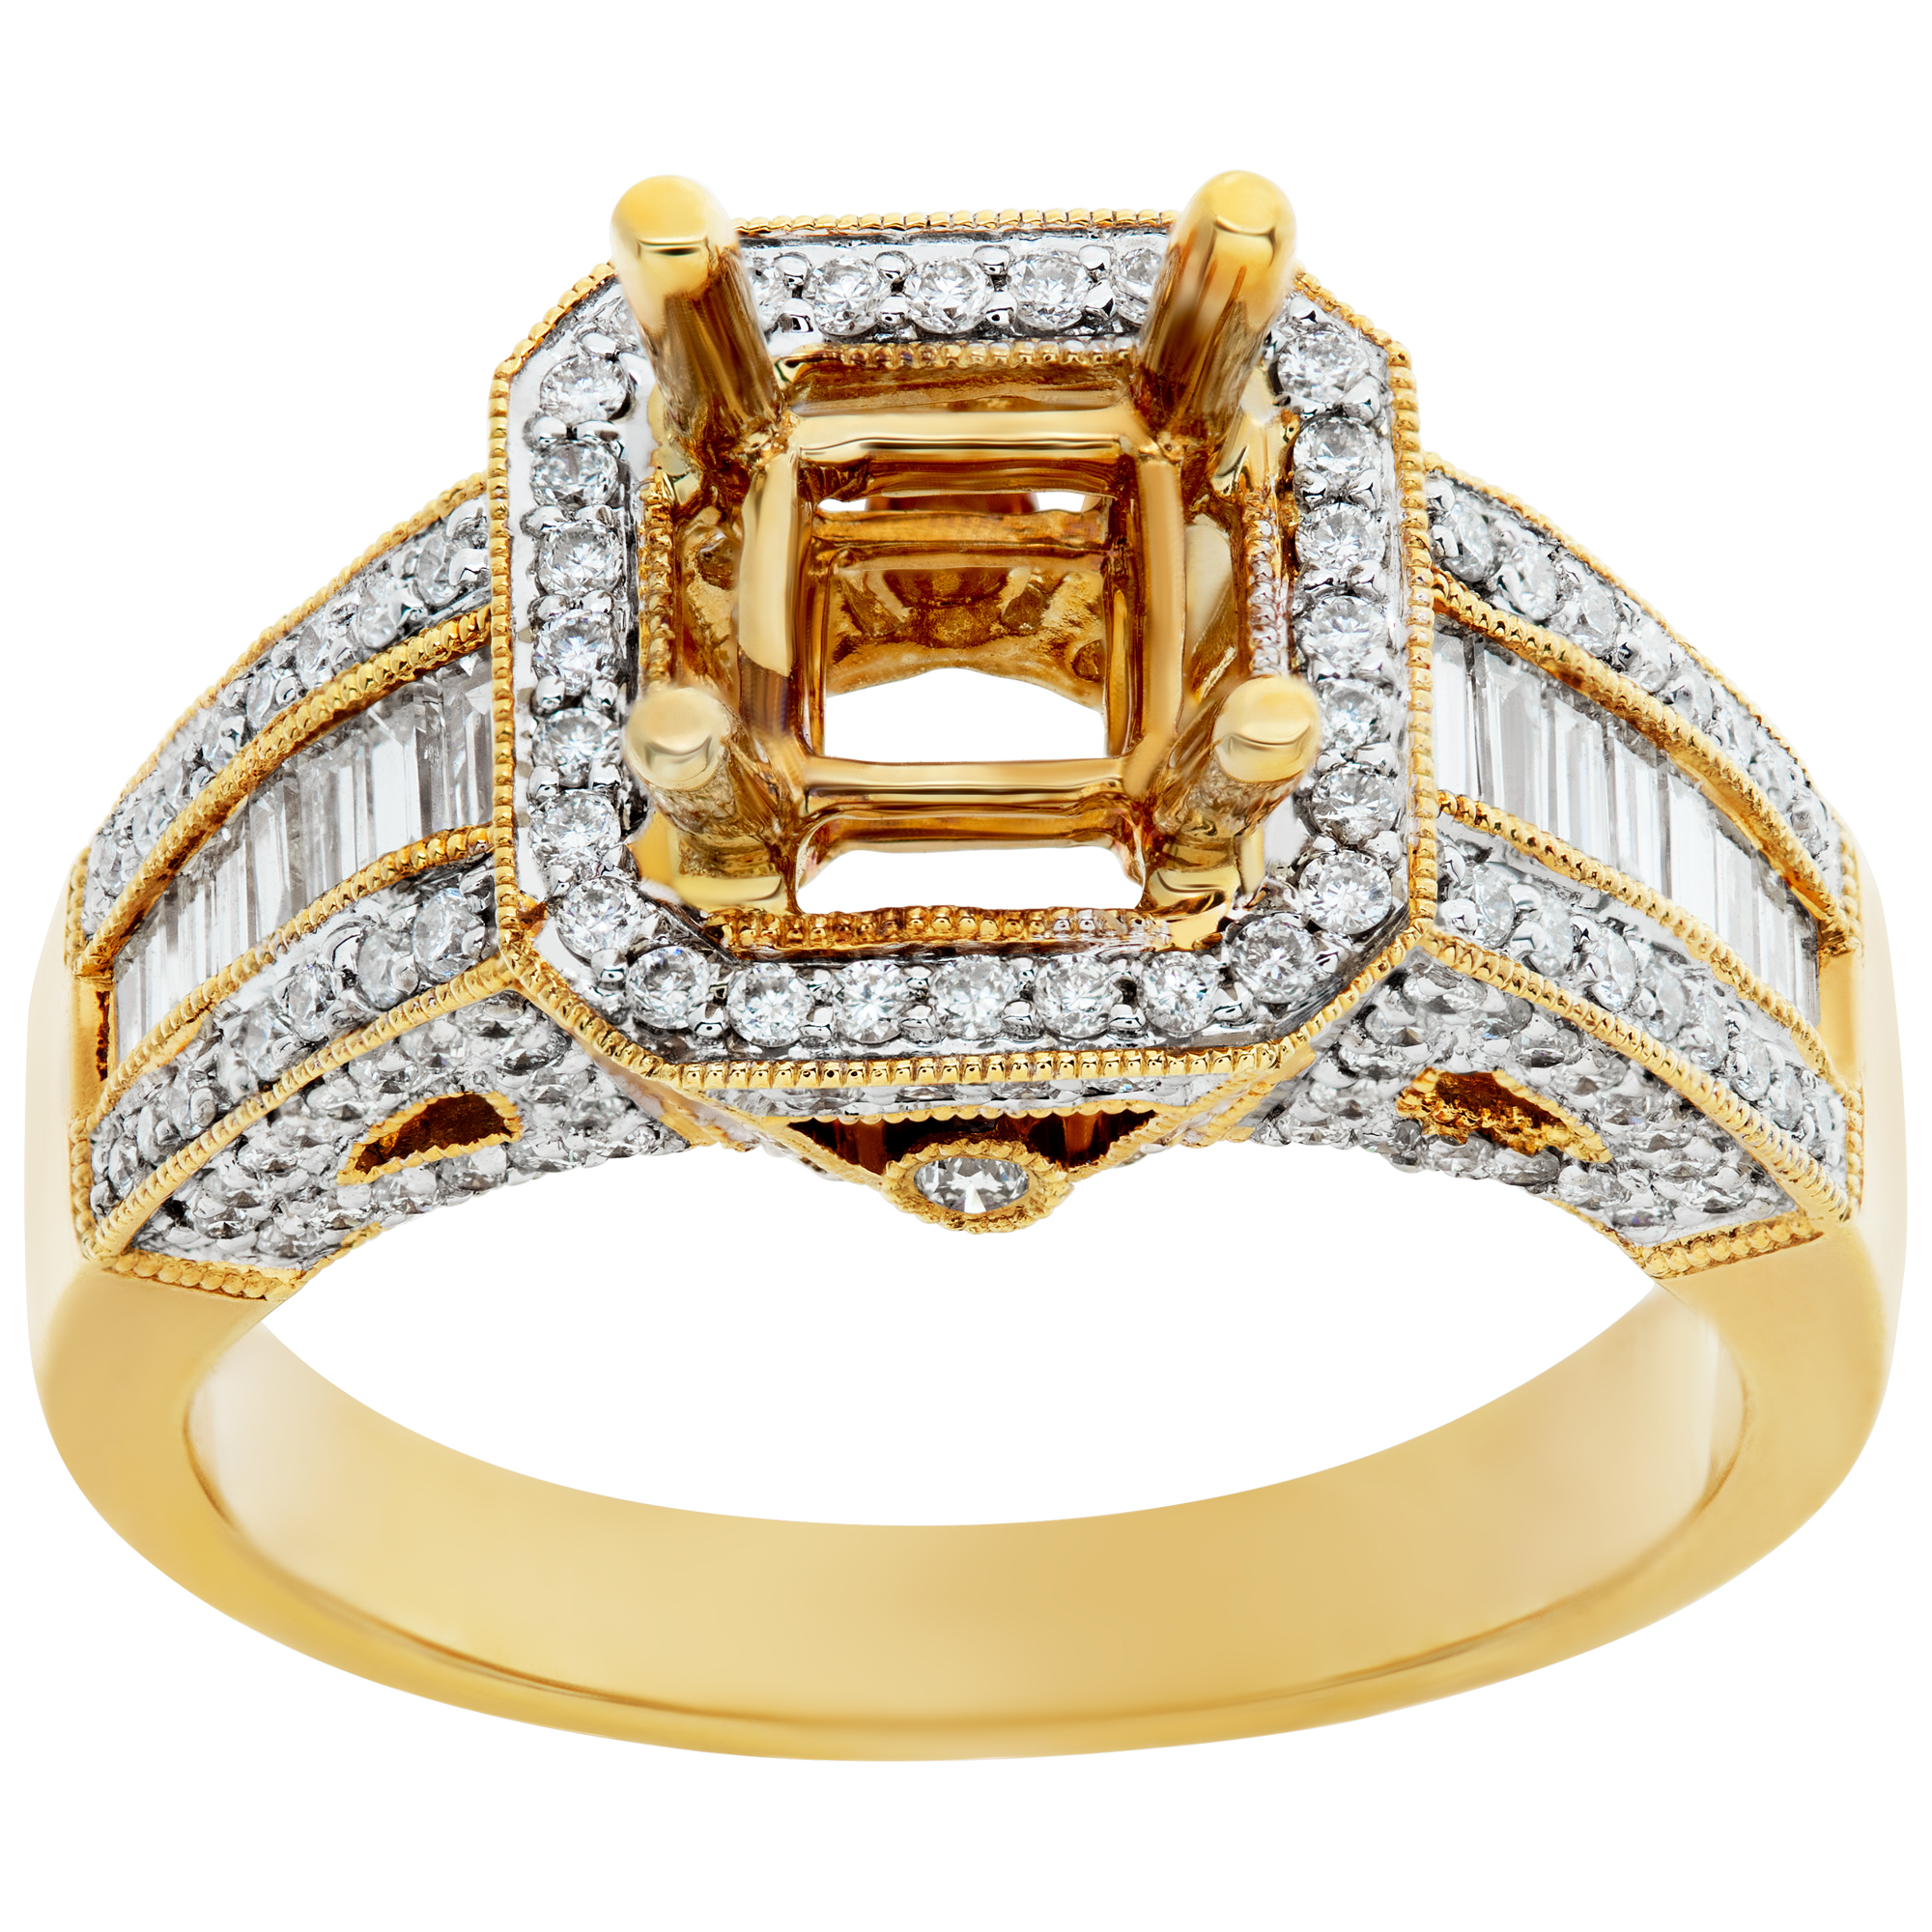 Diamond setting in 14k yellow gold;  0.90 carat in round & baguette diamonds.